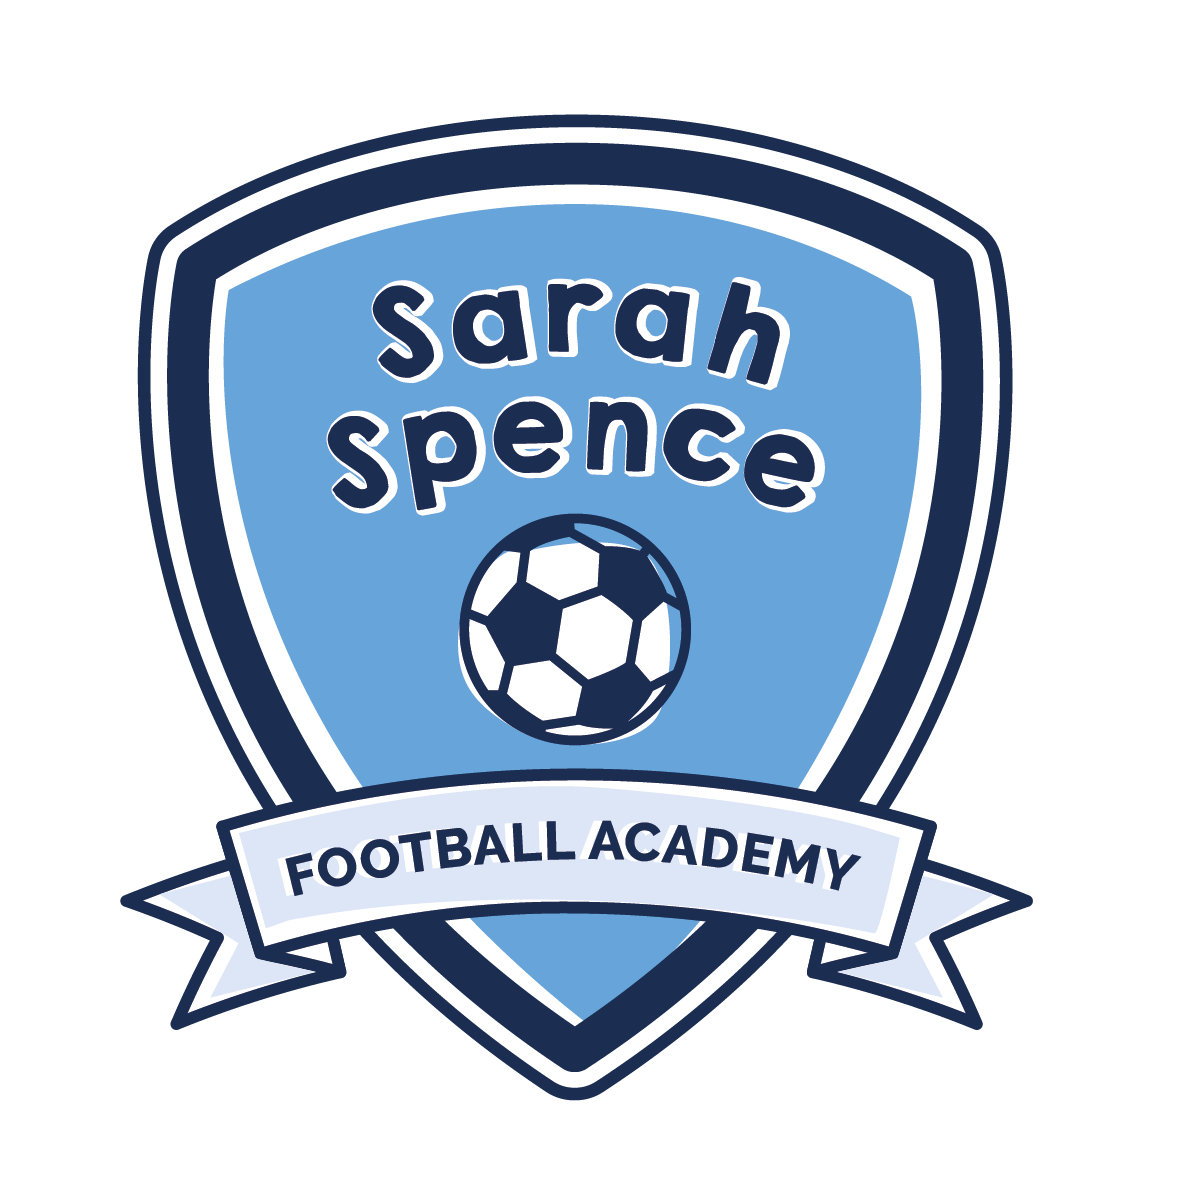 Sarah Spence Football Academy logo